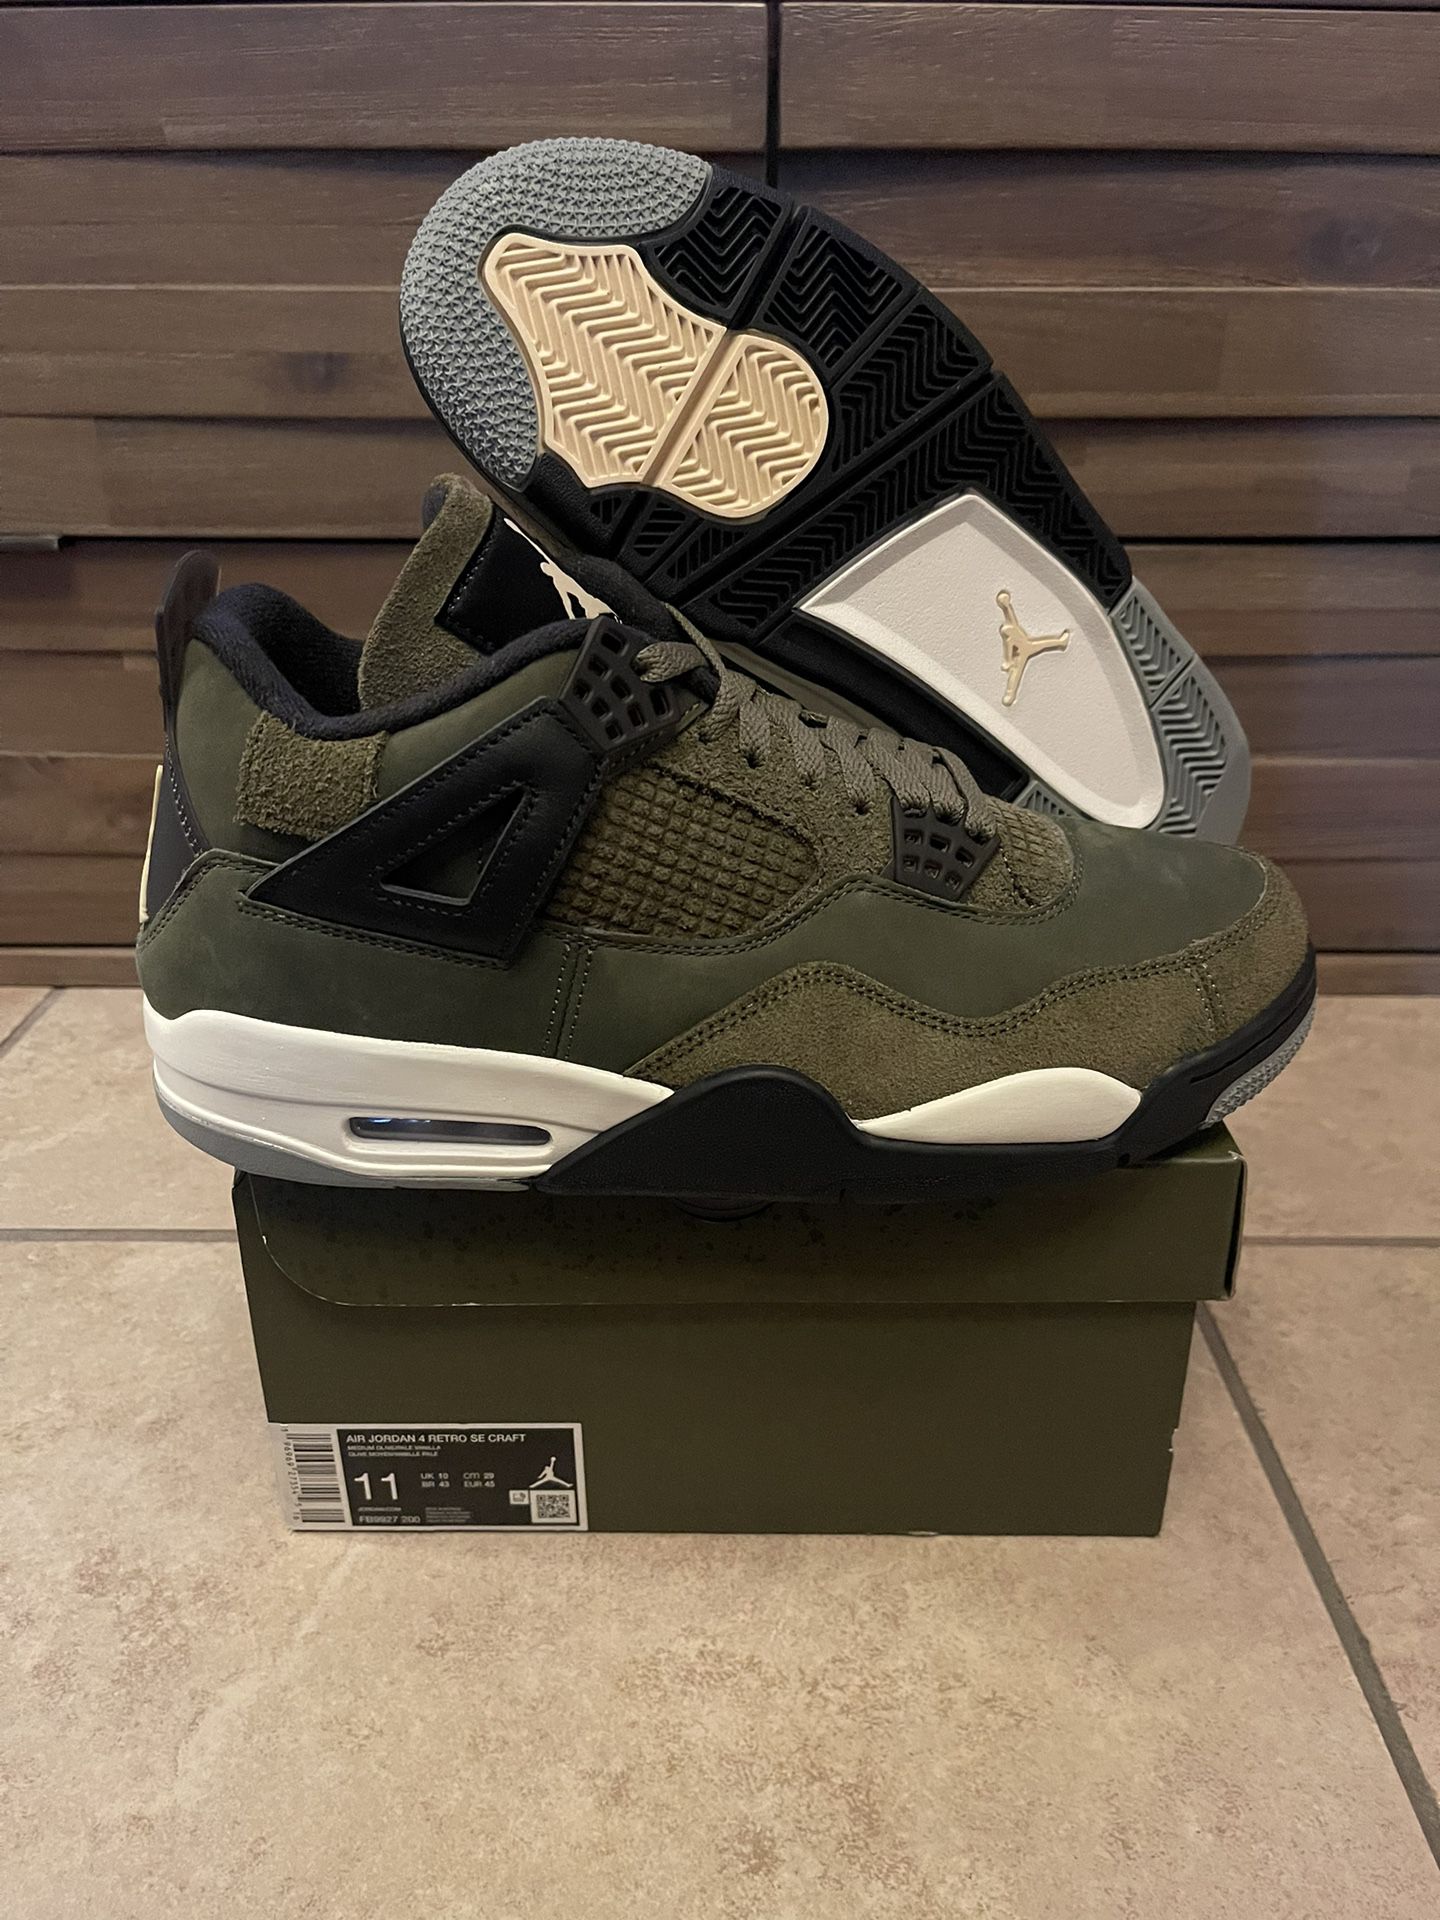 Air Jordan 4 “Olive Craft” Size 11 